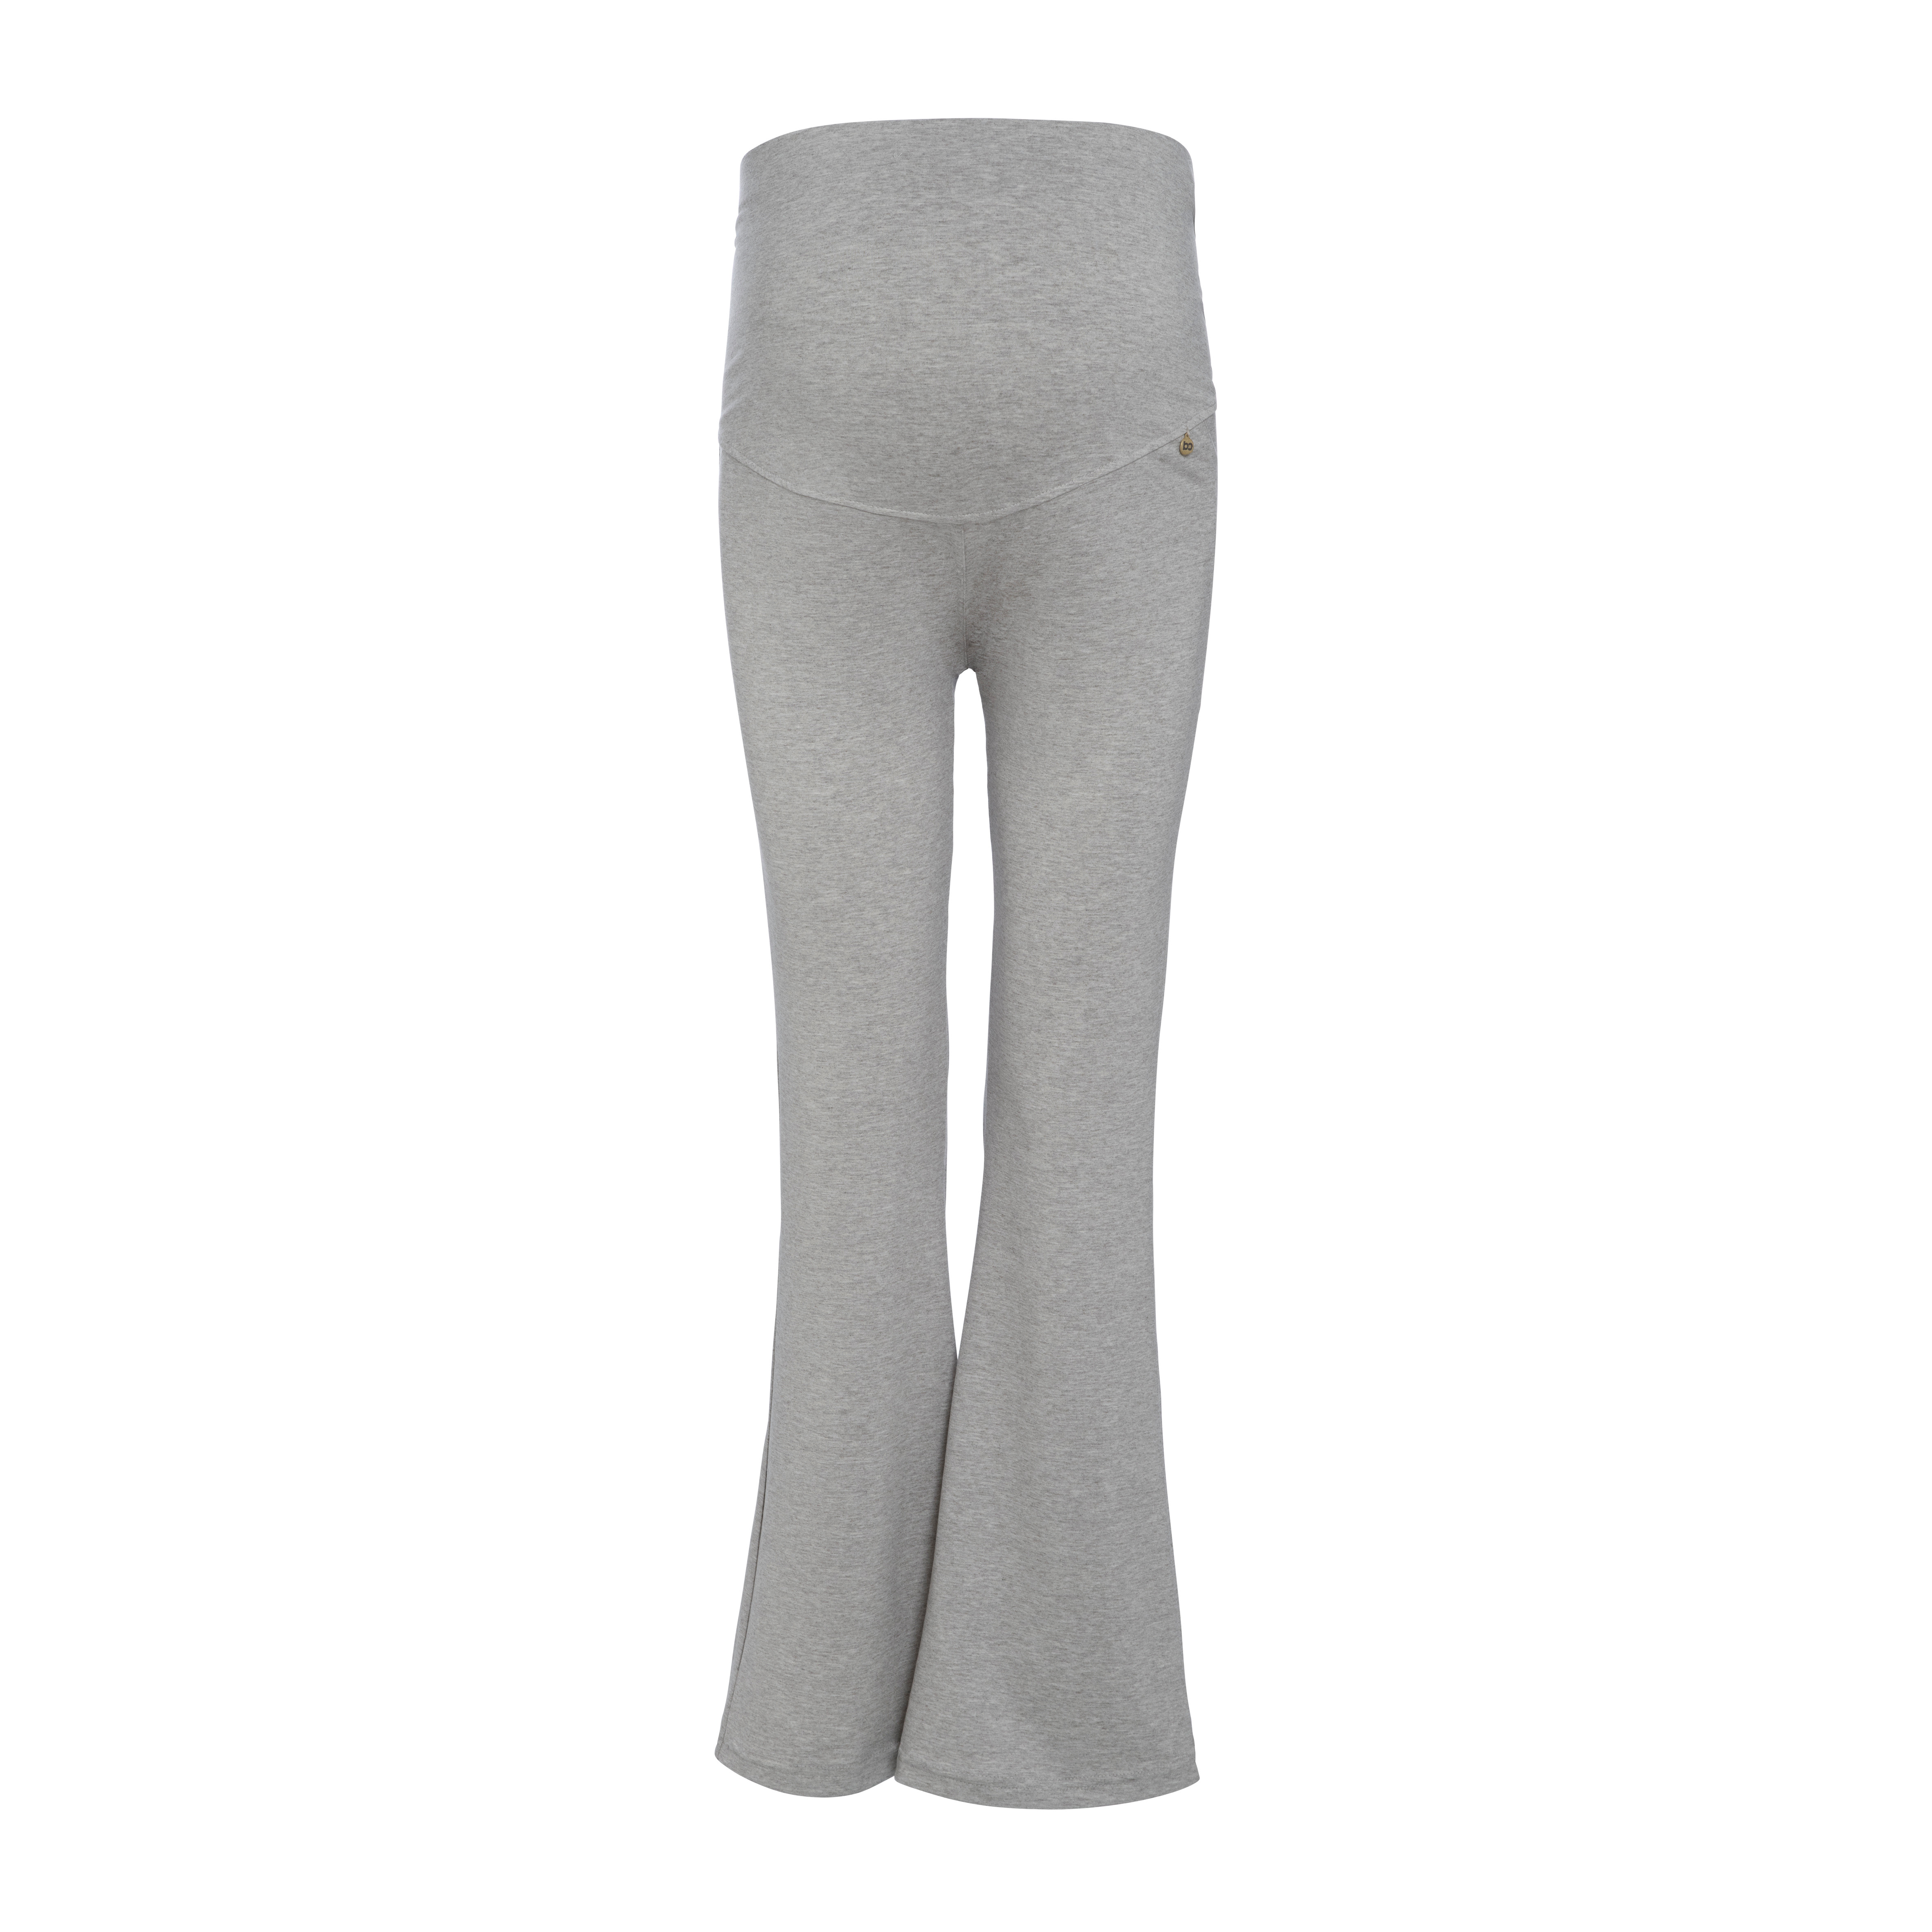 Flared pantalon de maternité Glow dusty grey - S